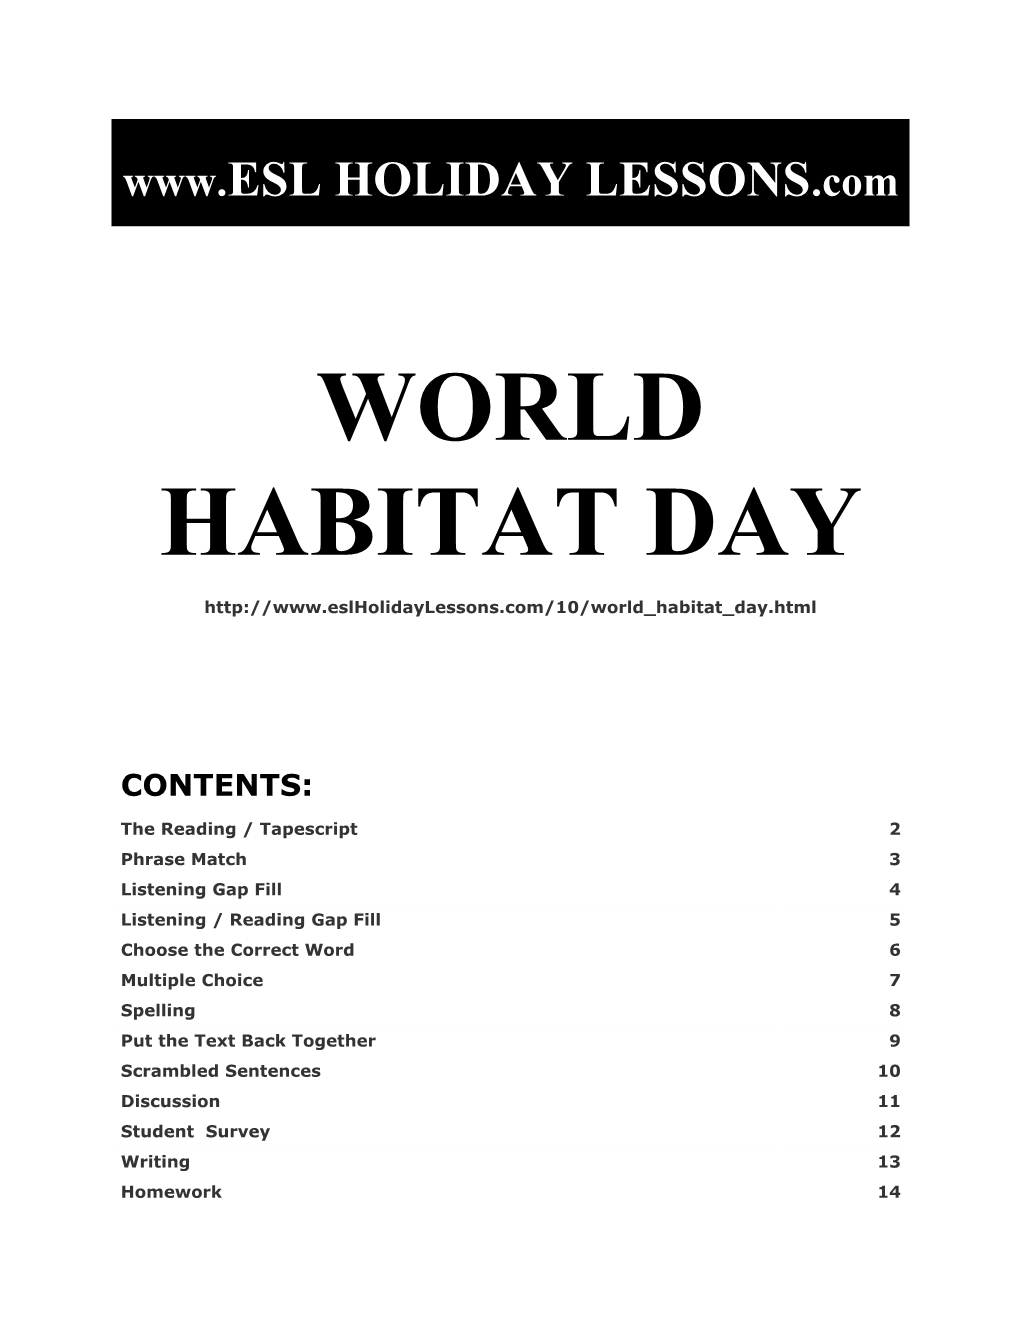 Holiday Lessons - World Habitat Day